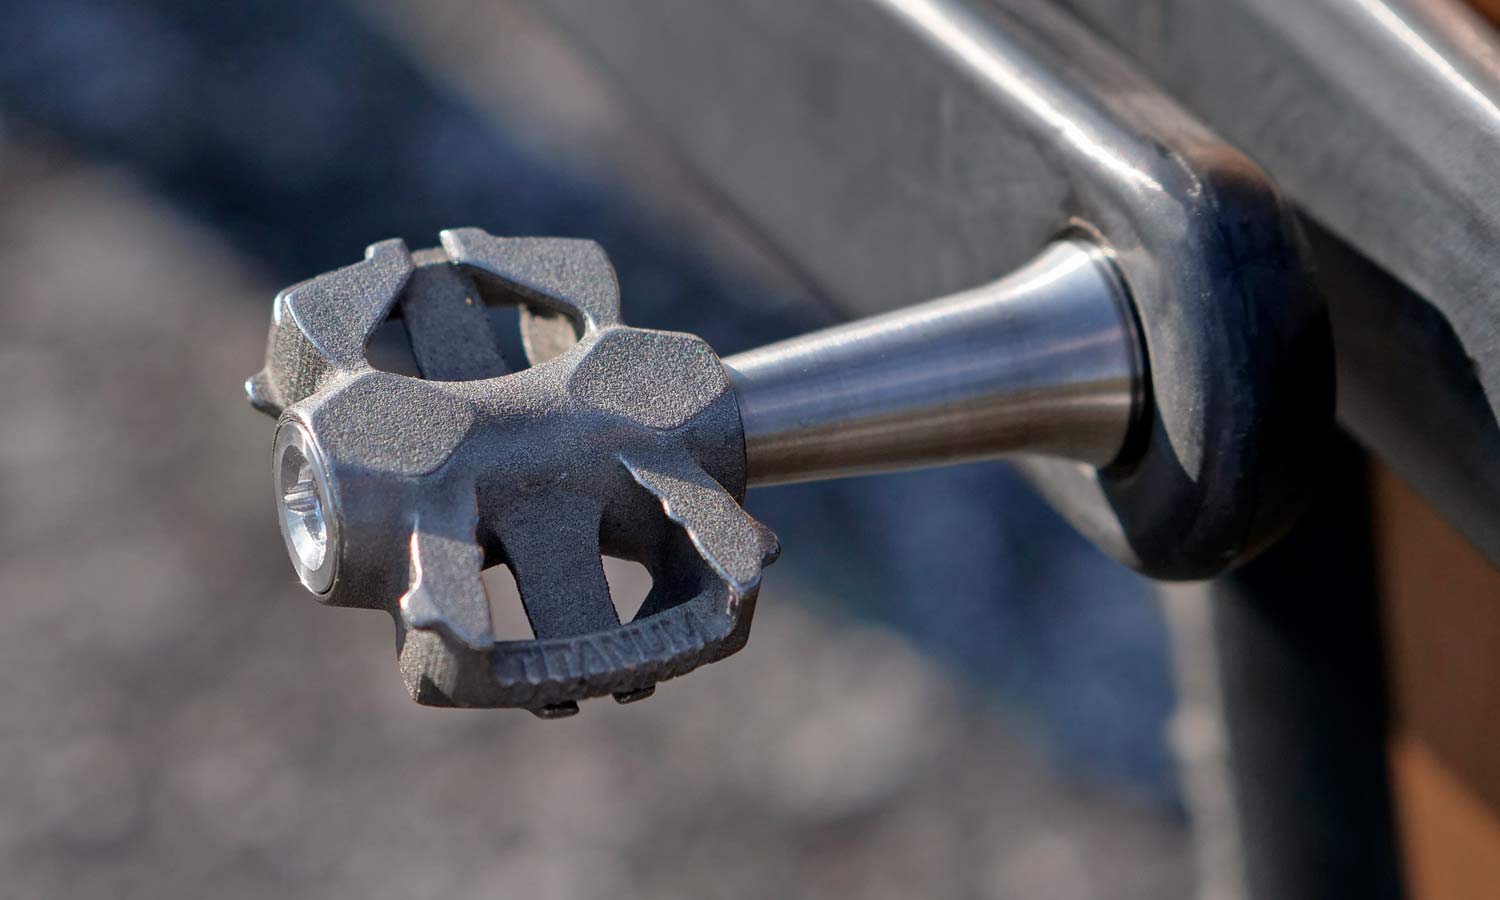 custom Scott Addict Gravel Tuned Dangerholm edition lightweight carbon prototype gravel bike project, ti pedals